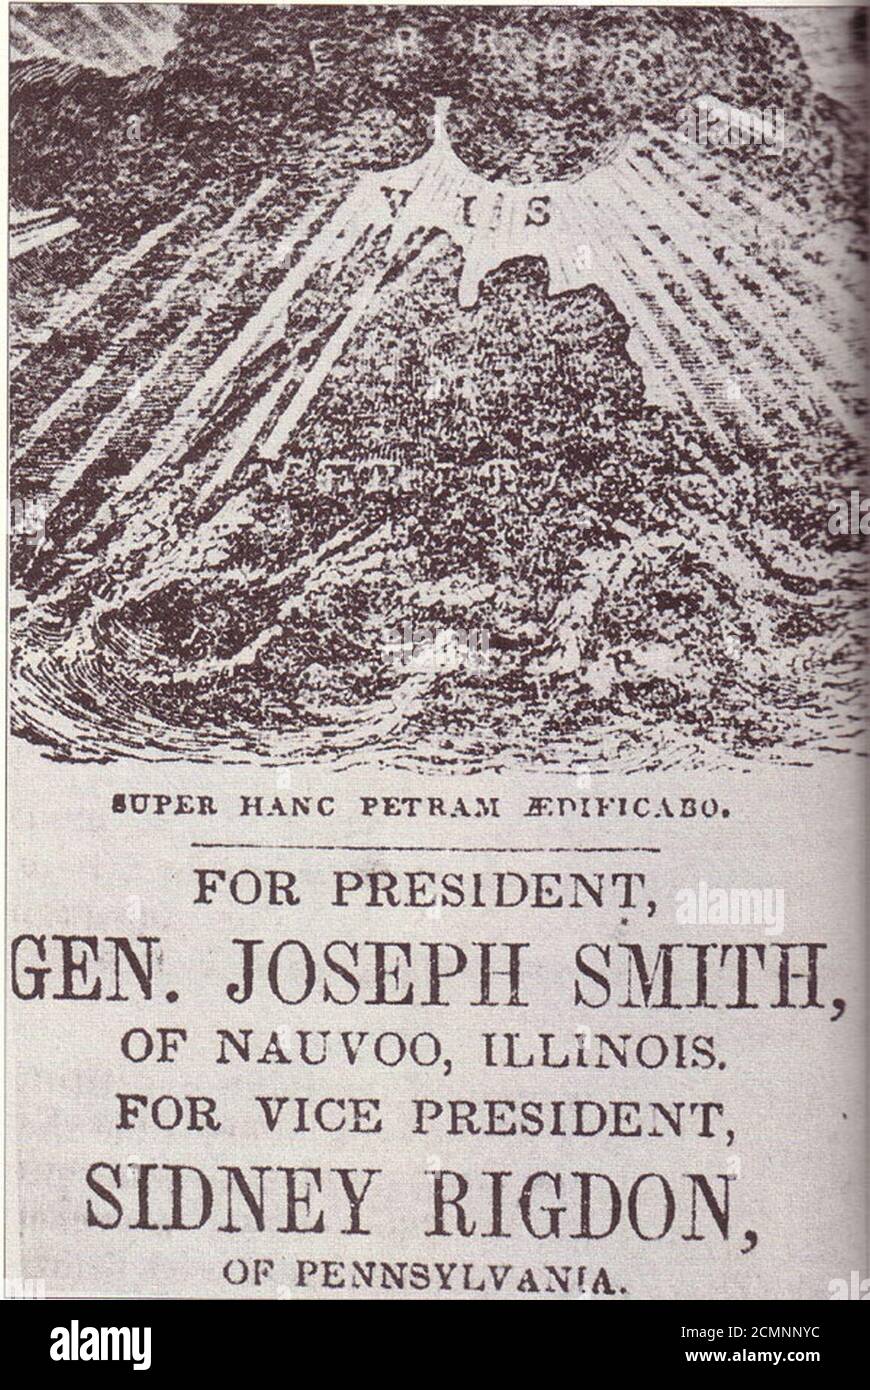 Joseph Smith presidential election pamphlet, 1844. Stock Photo